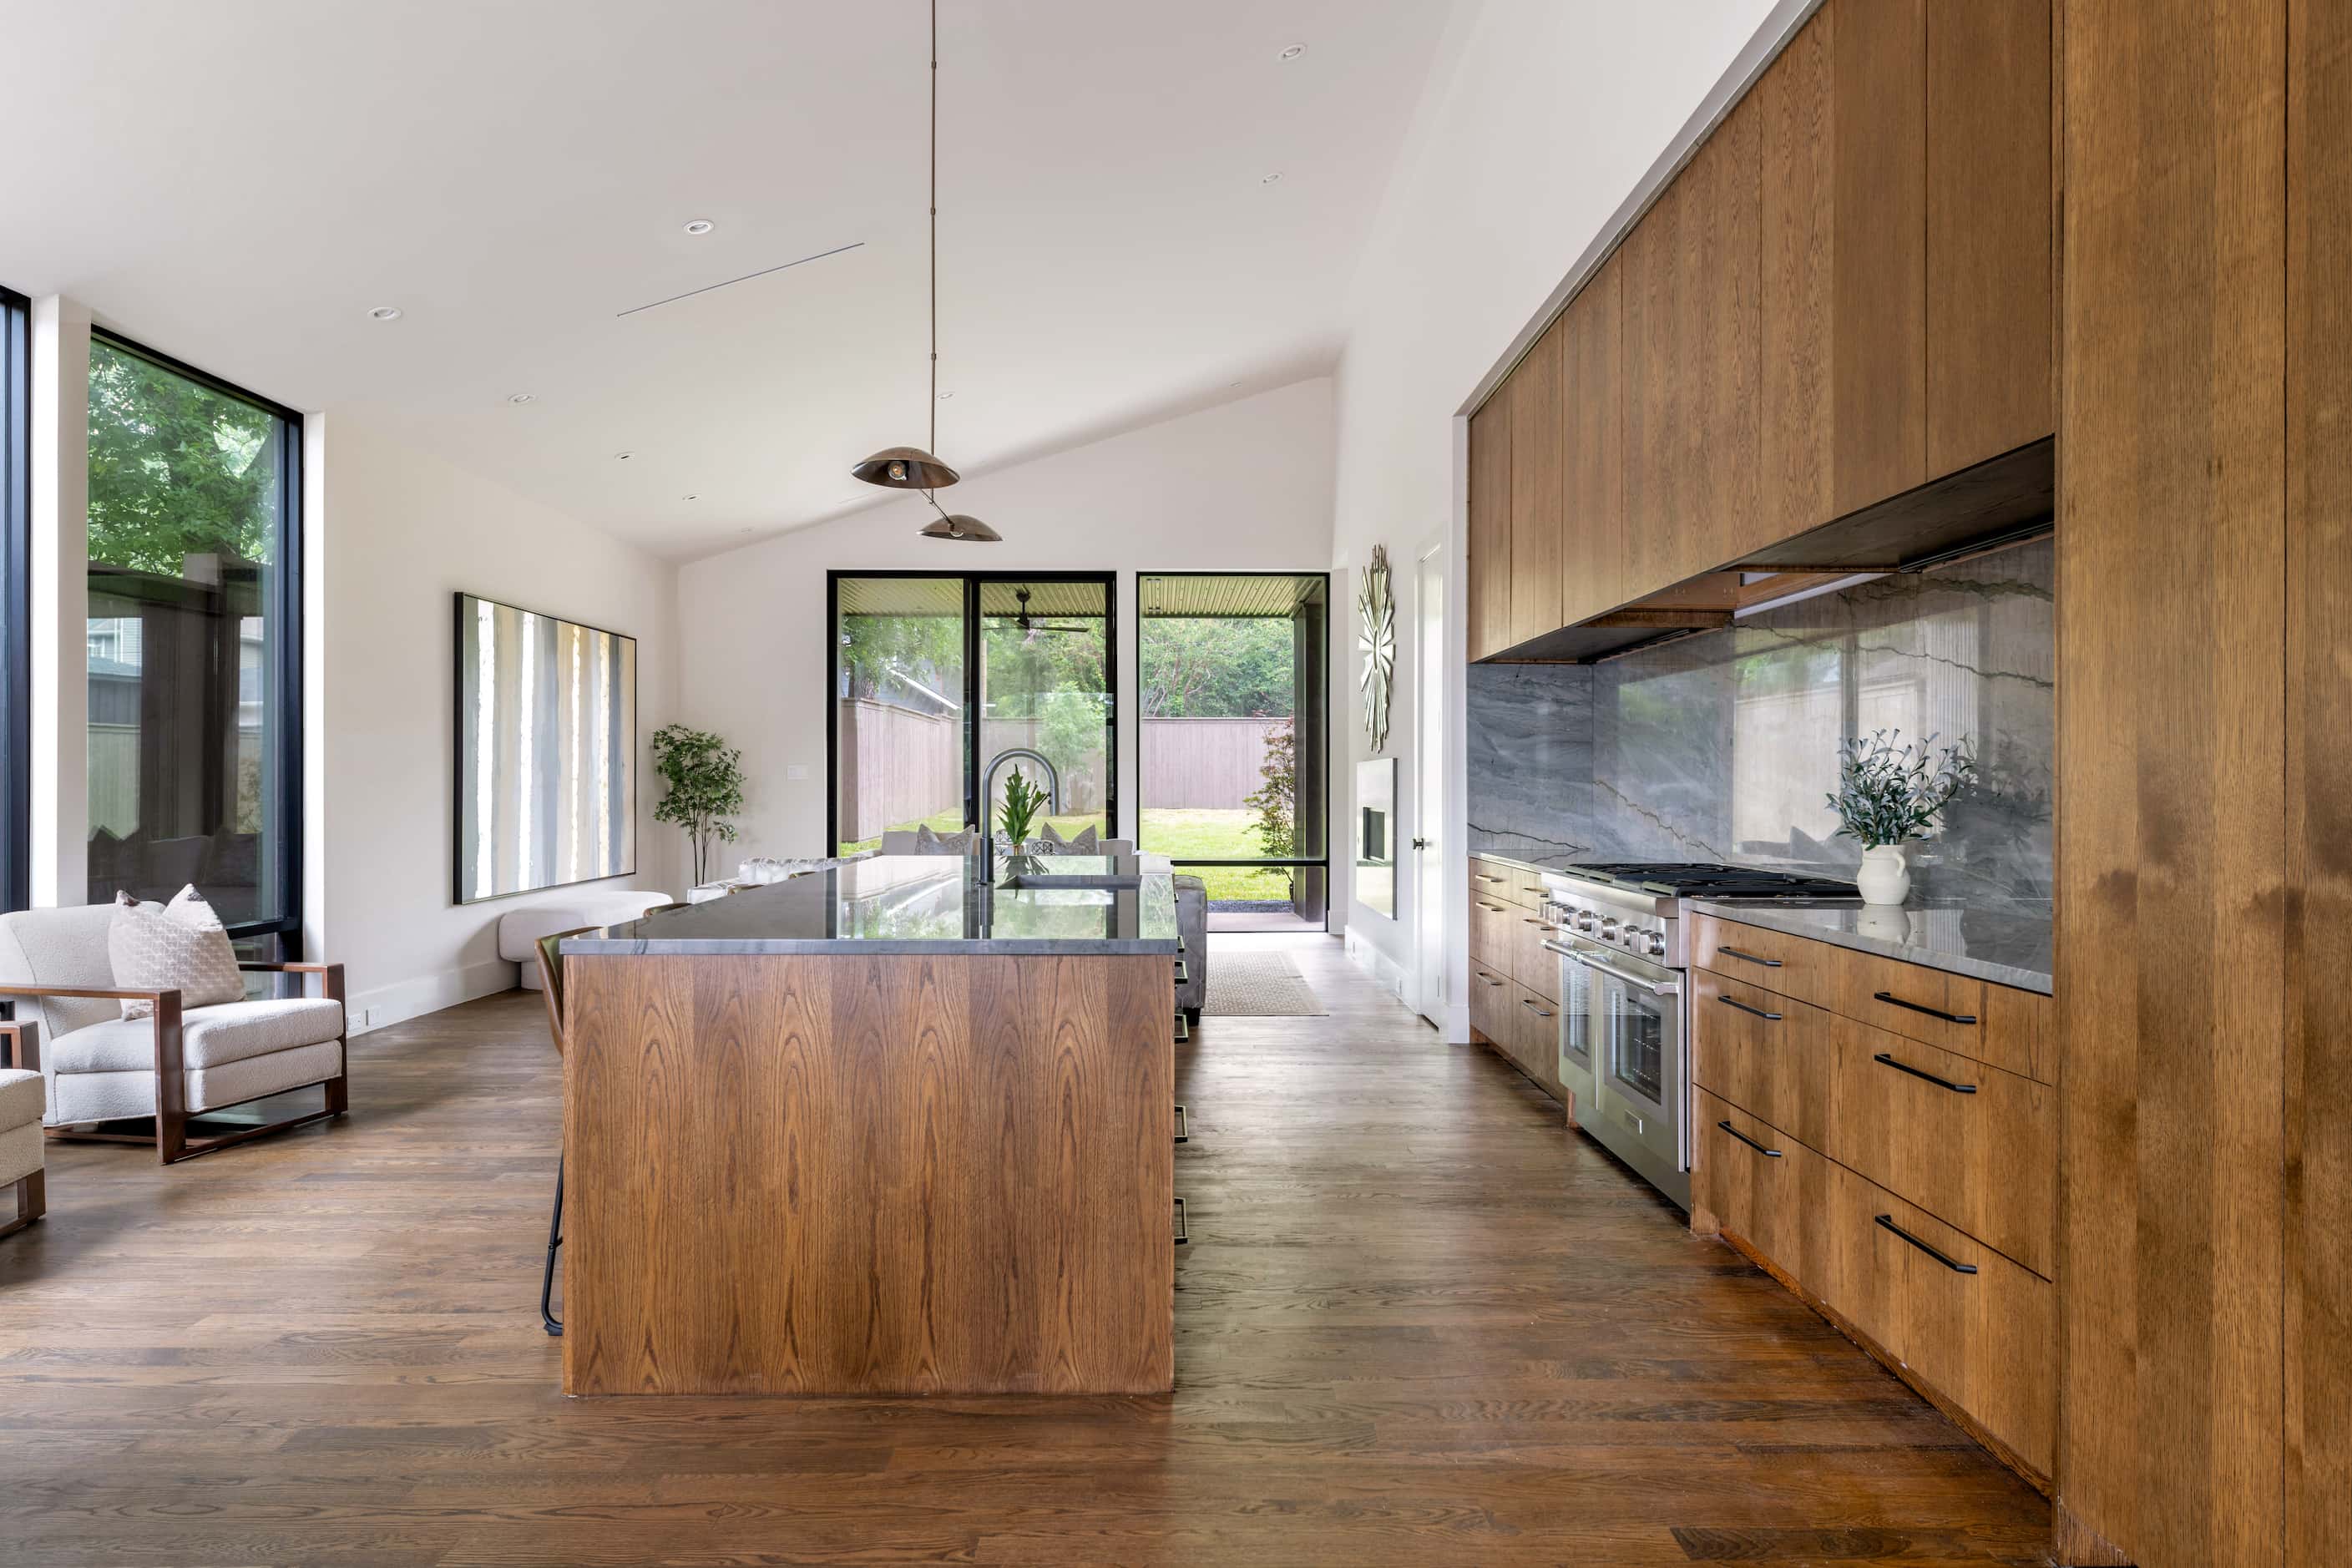 Kitchen with brown wood countertops, wood floors and open-concept floor plan